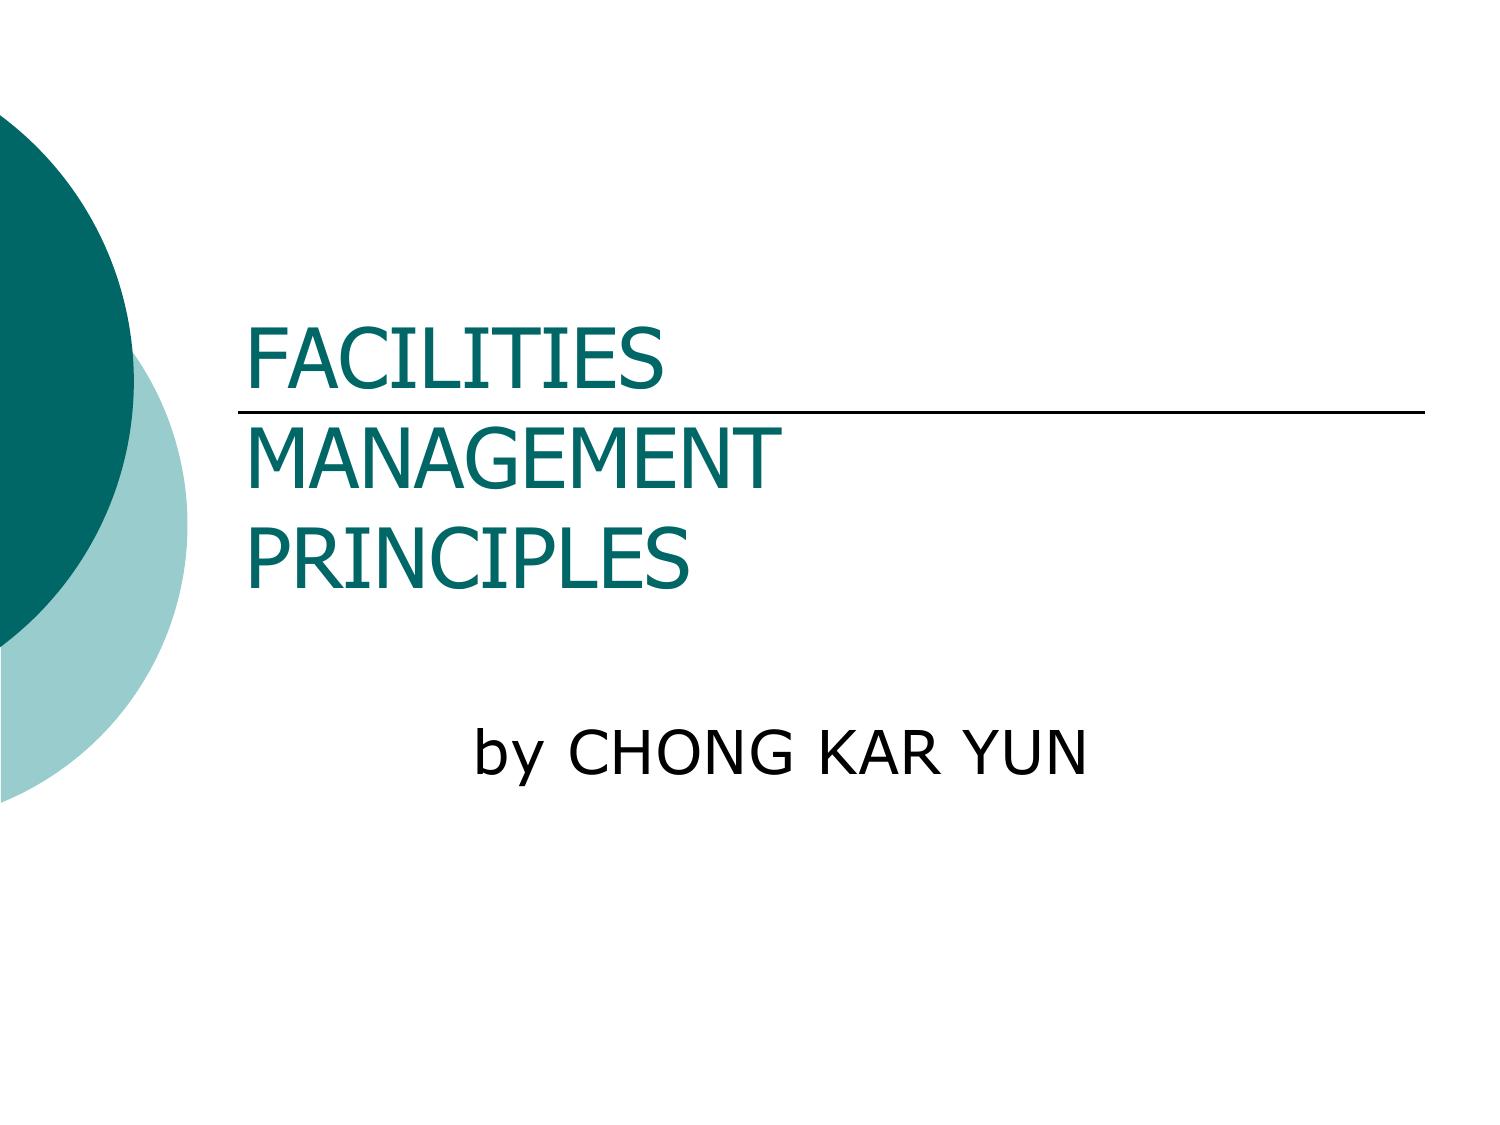 FACILITIES MANAGEMENT PRINCIPLES